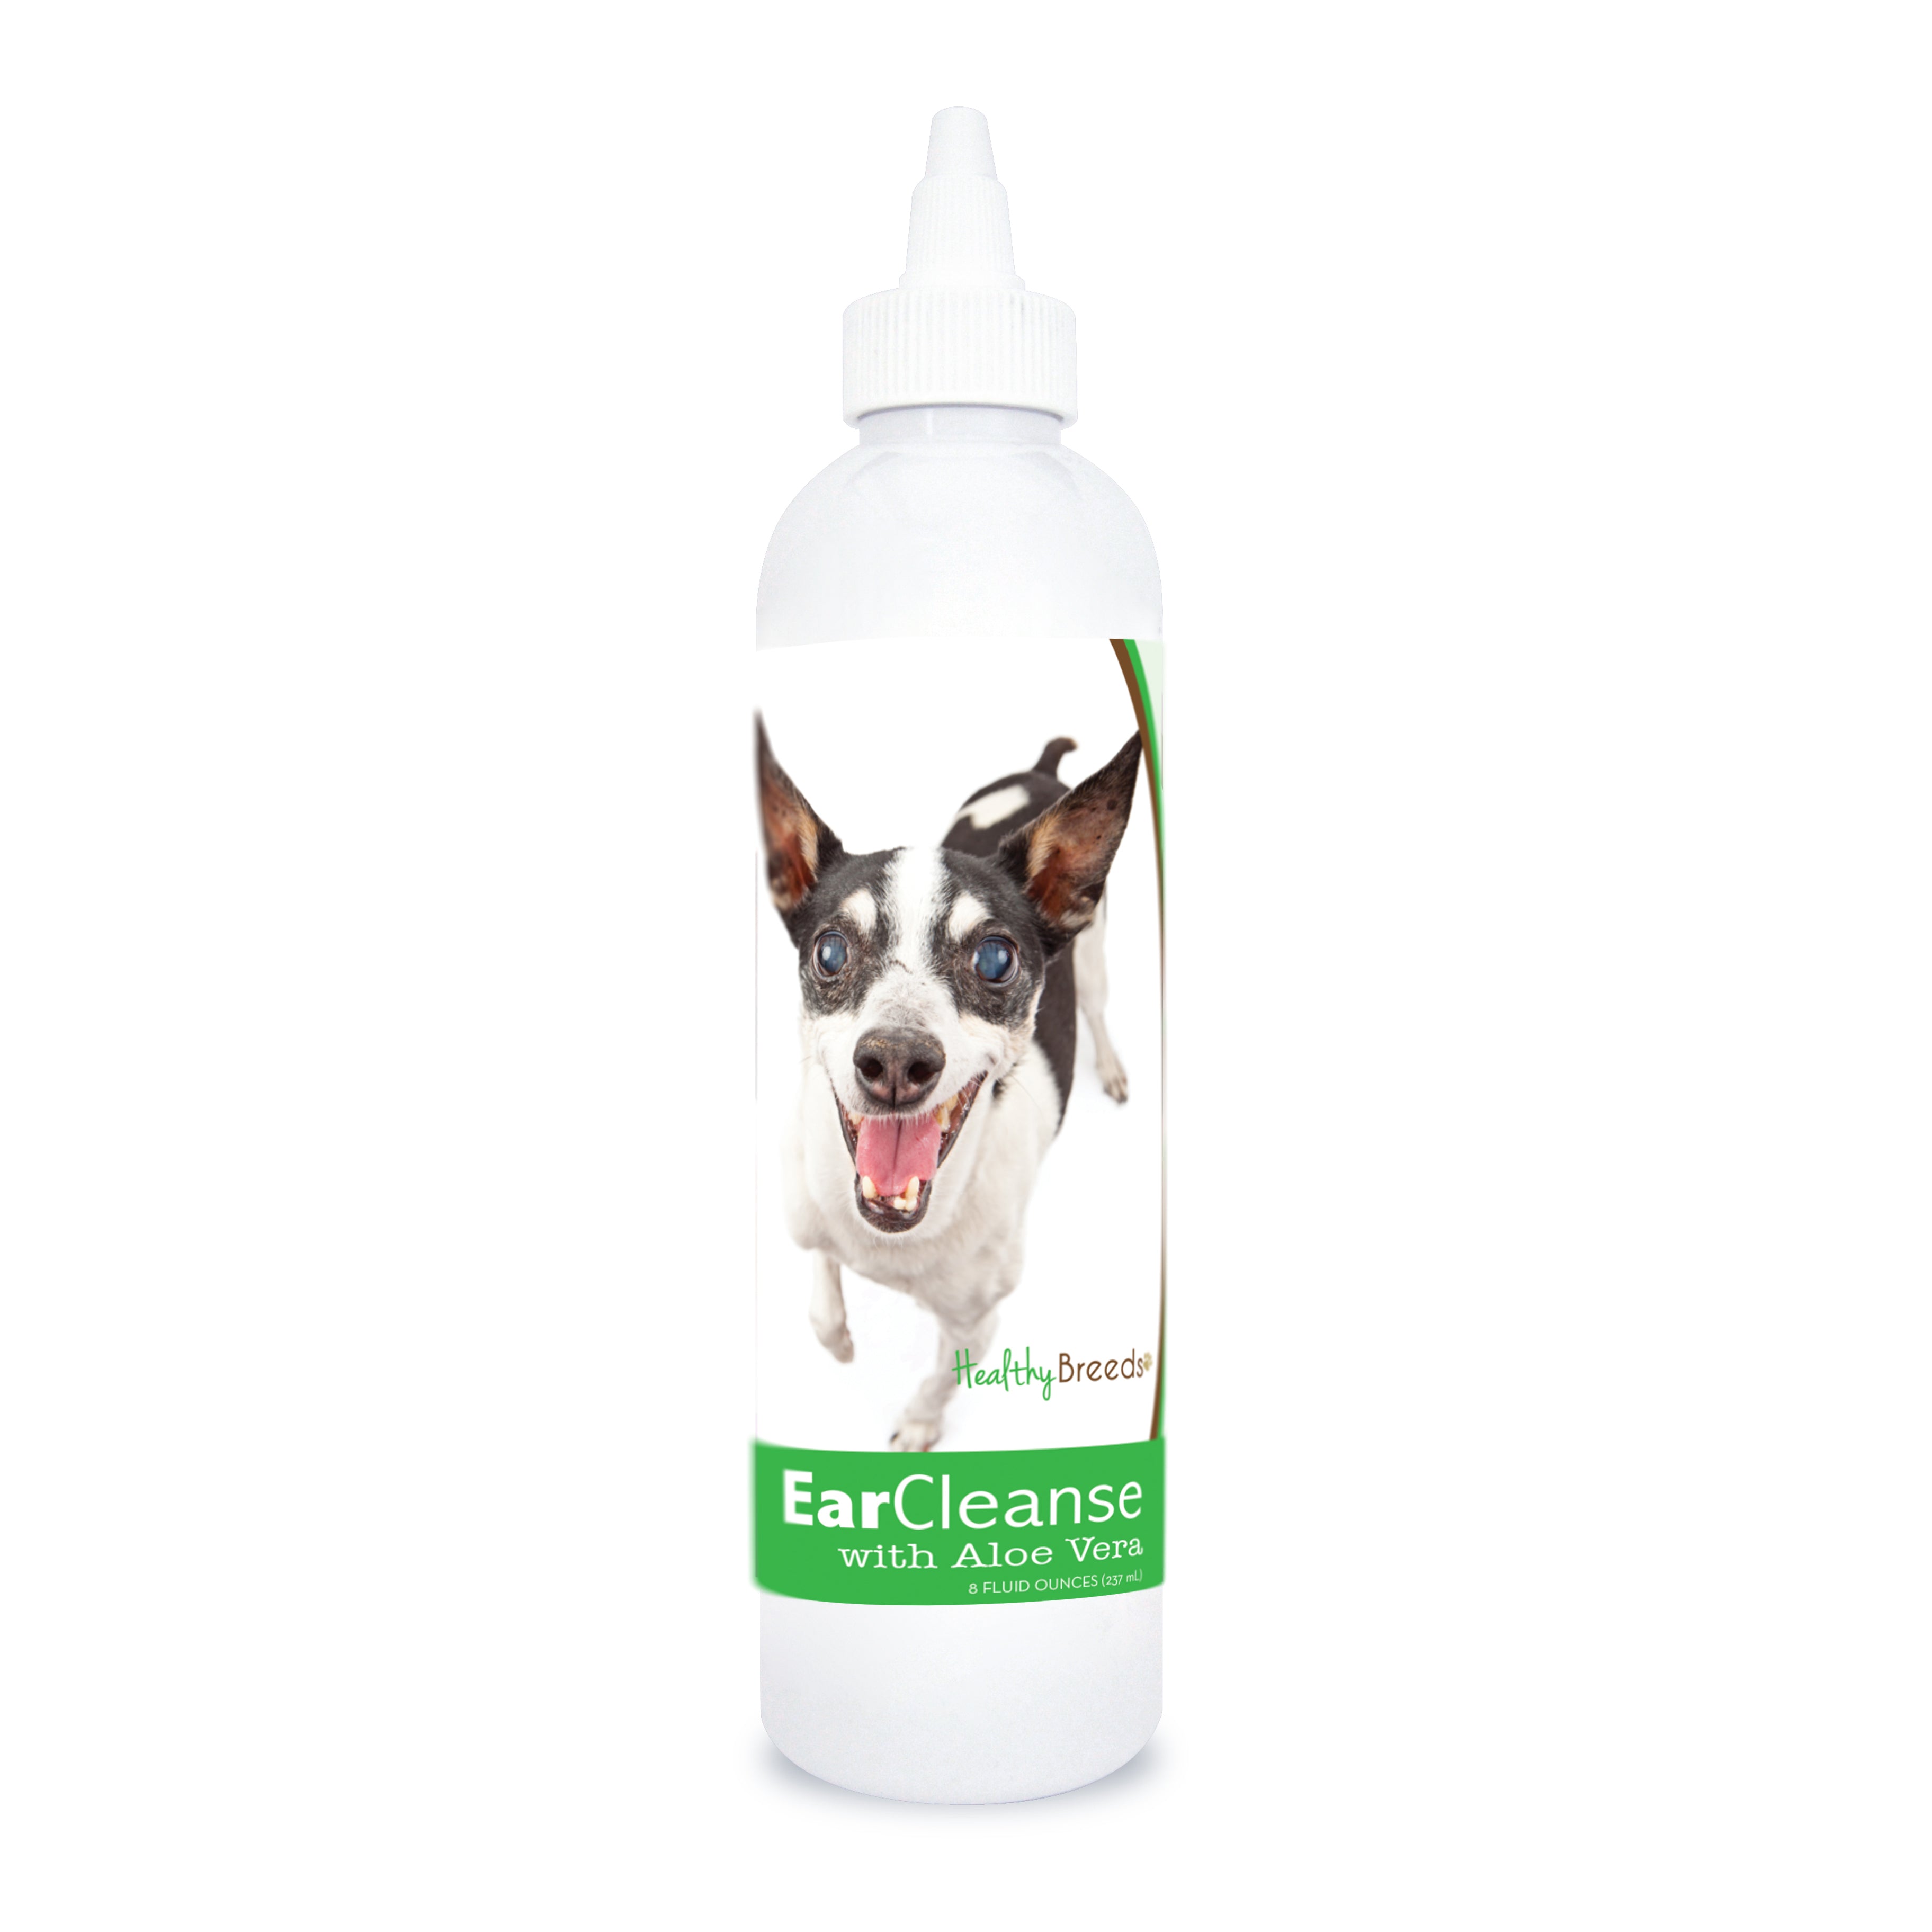 Rat Terrier Ear Cleanse with Aloe Vera Cucumber Melon 8 oz